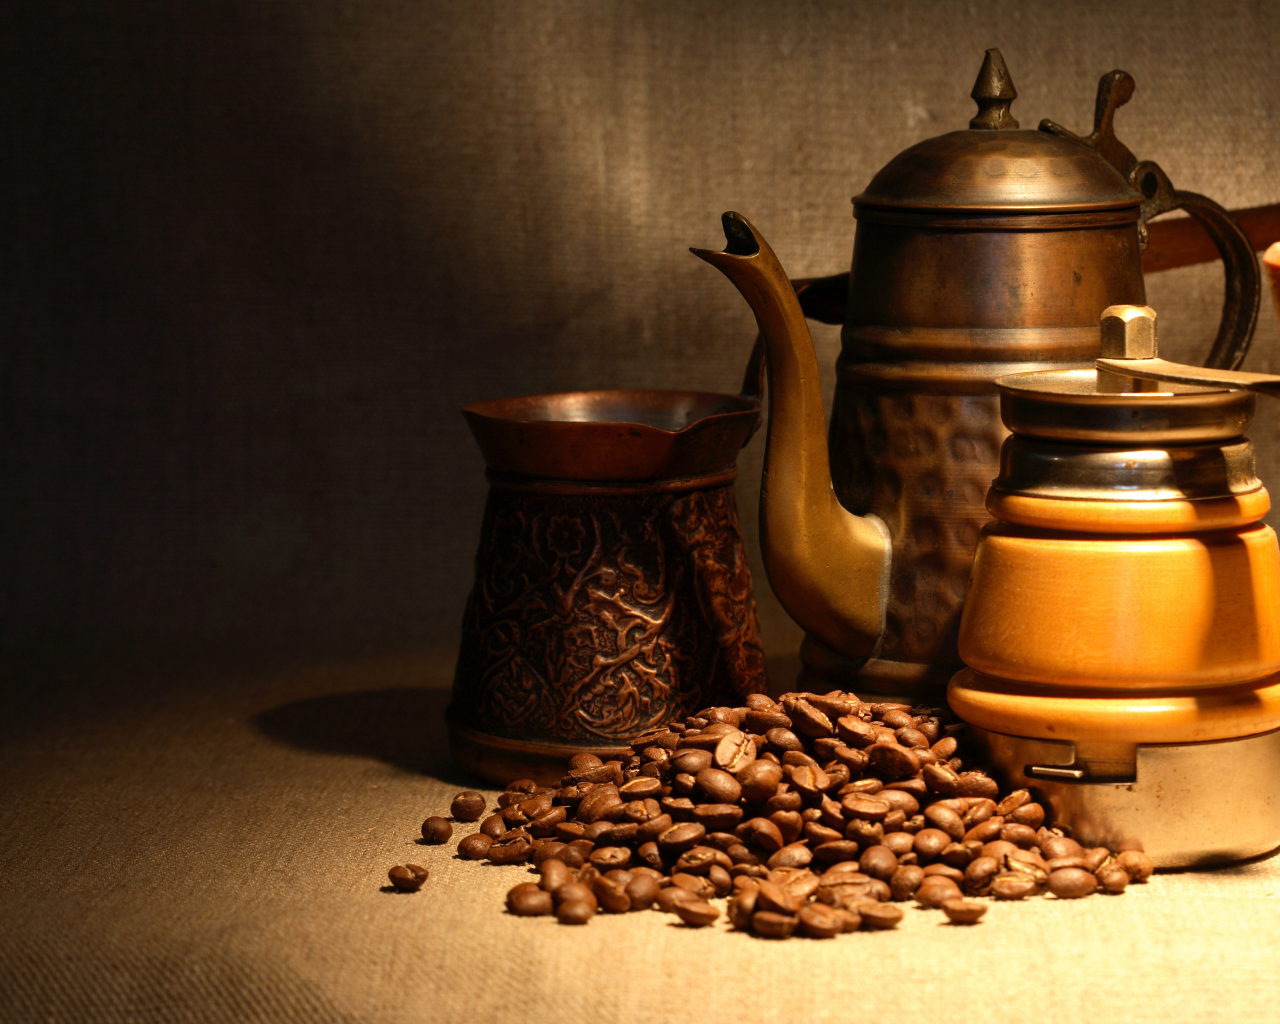 Кофемолка, турка, чайник и кофейные зерна на столе